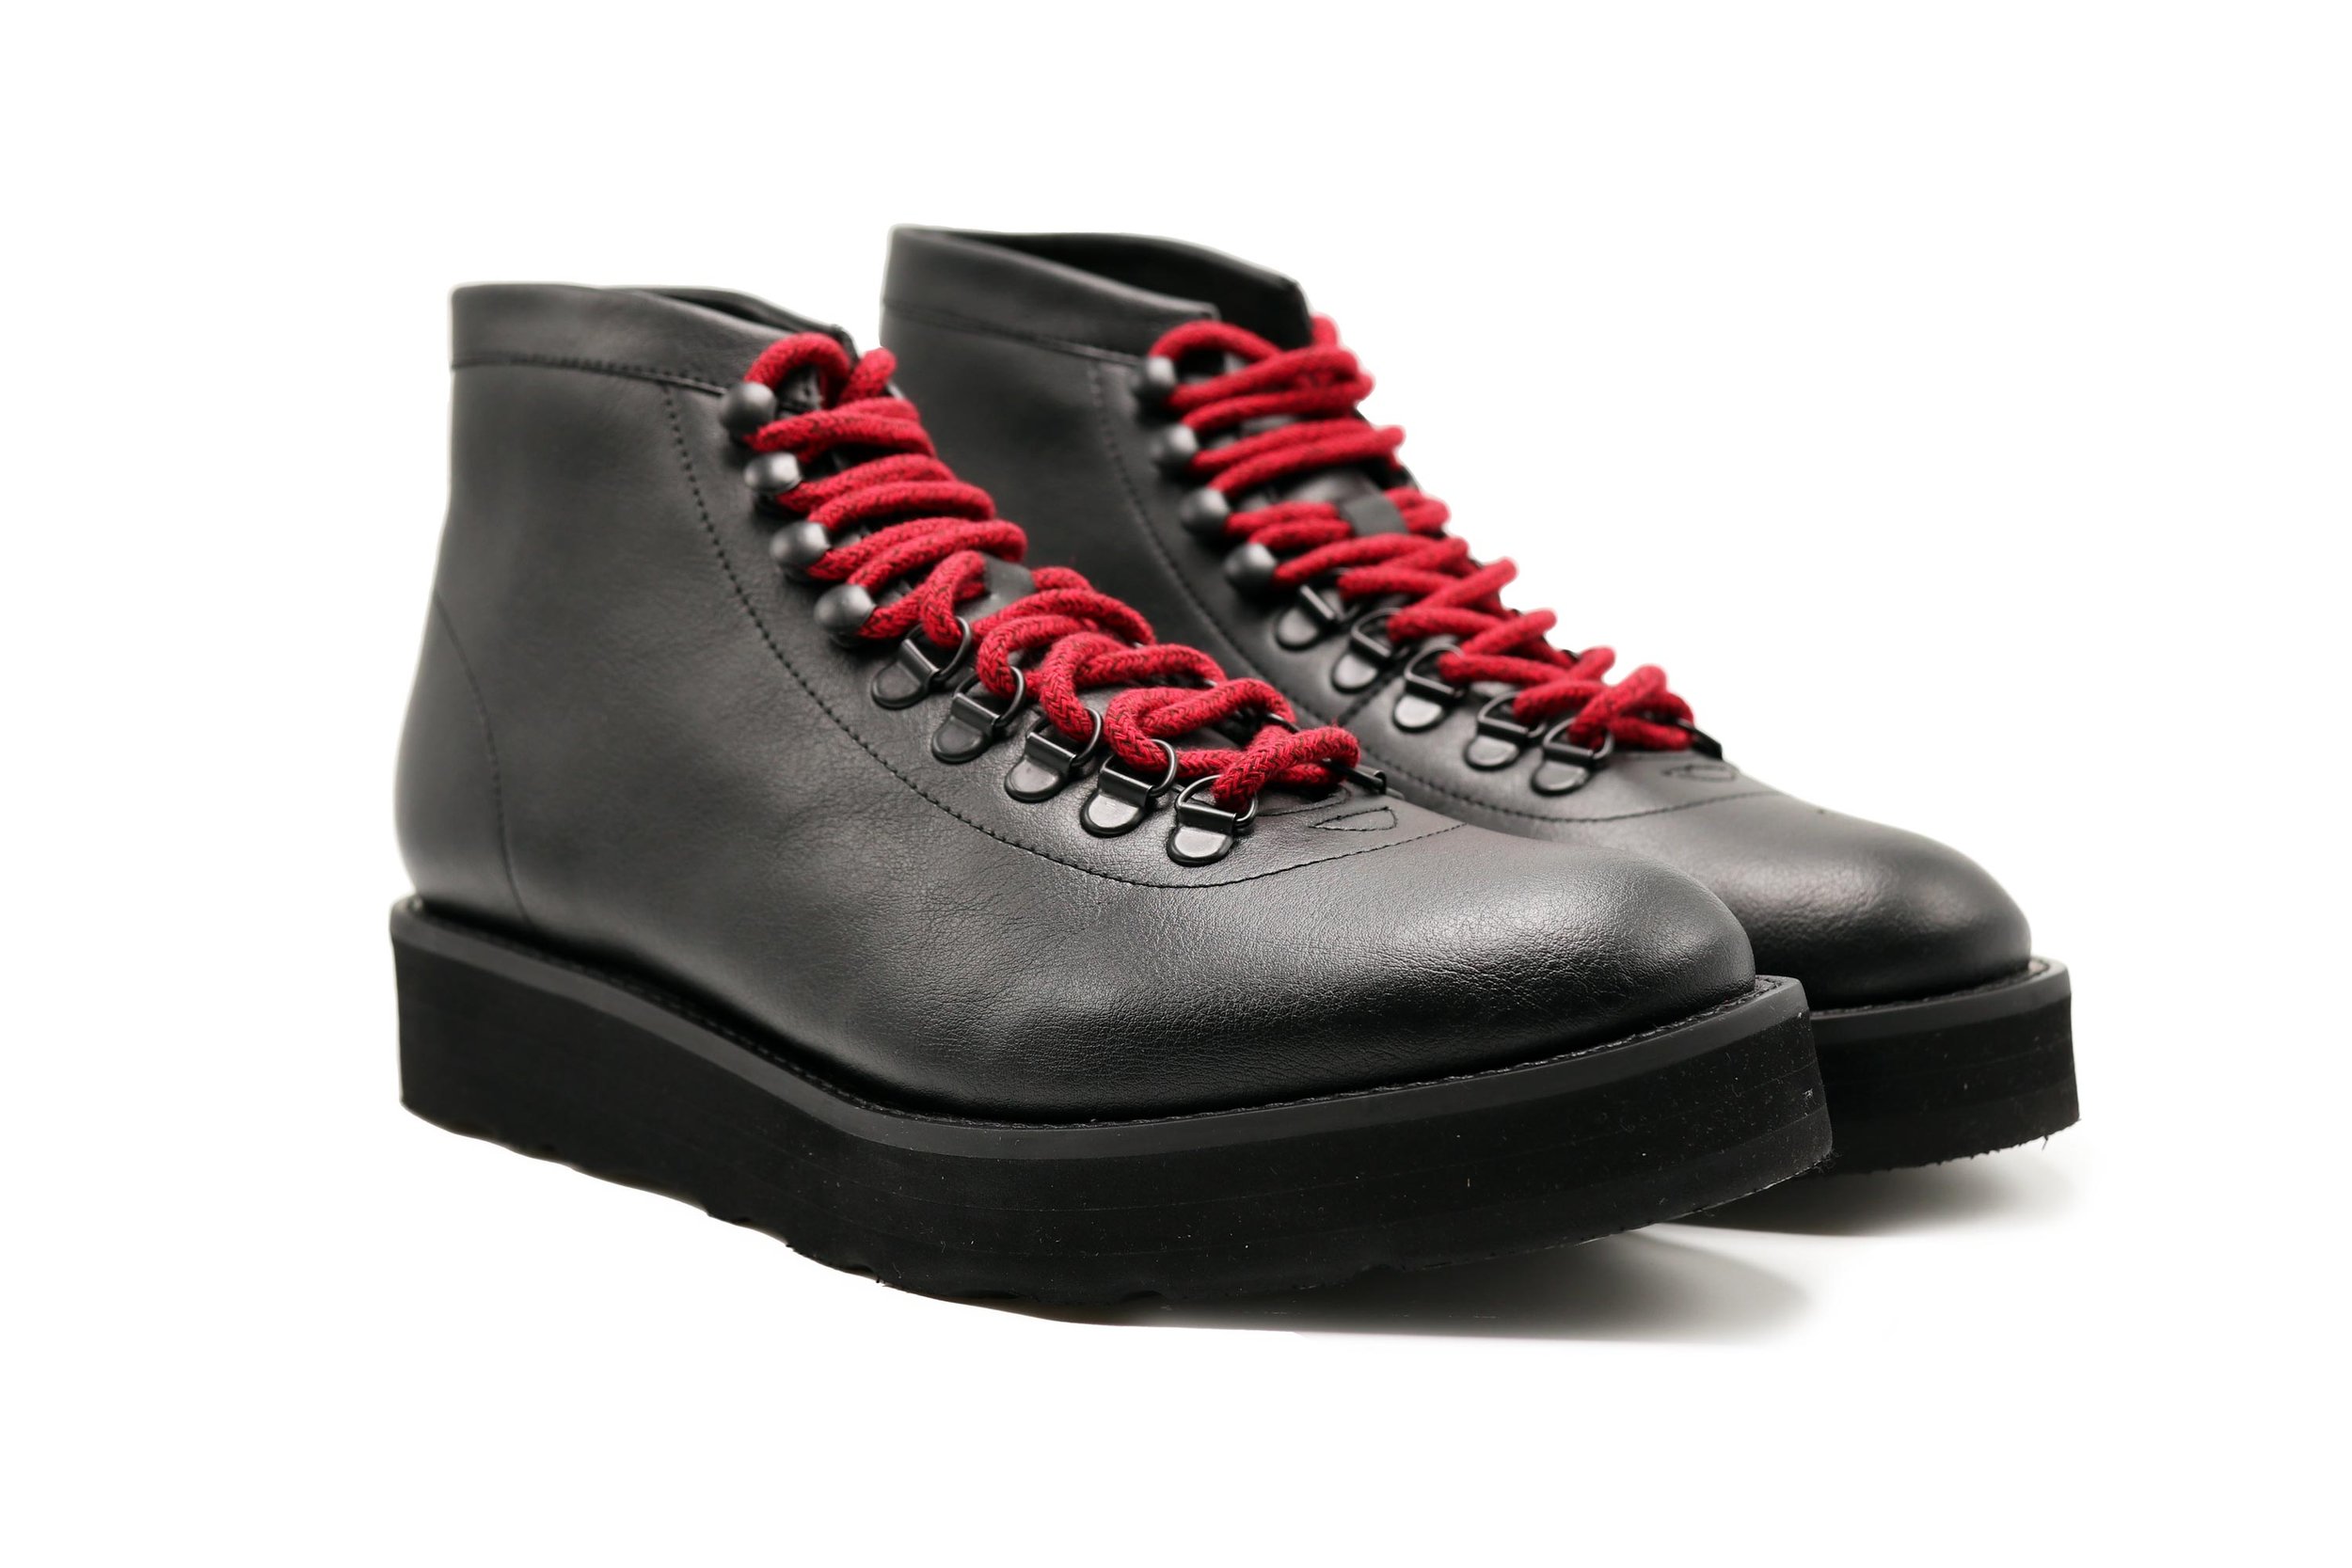 Vegan Footwear - men's & gender-neutral boots, shoes & sneakers made w ...